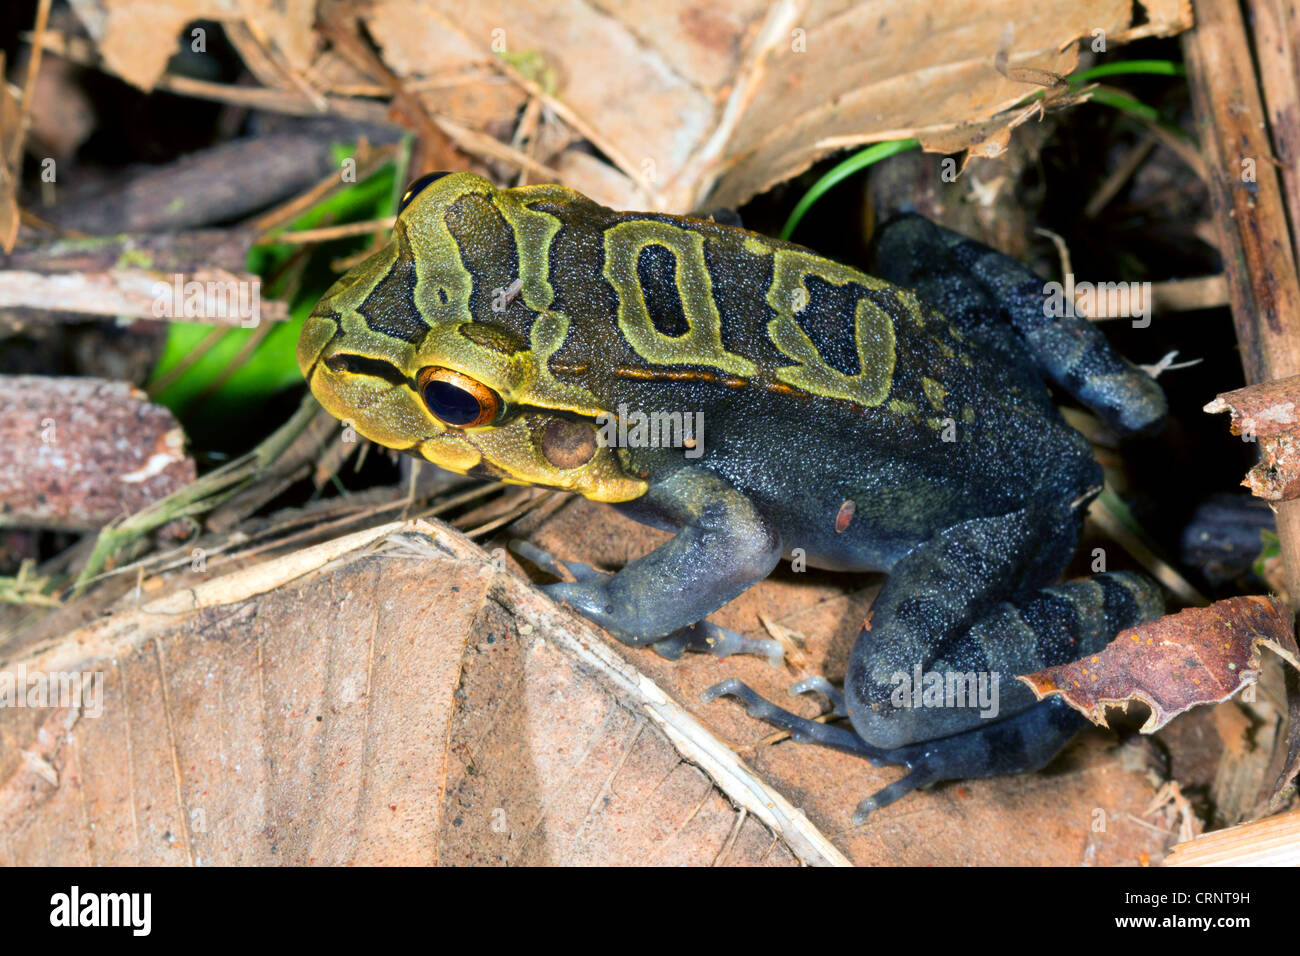 A juvenile Knudsen's Bullfrog (Leptodactylus knudseni) from rainforest, Ecuador Stock Photo